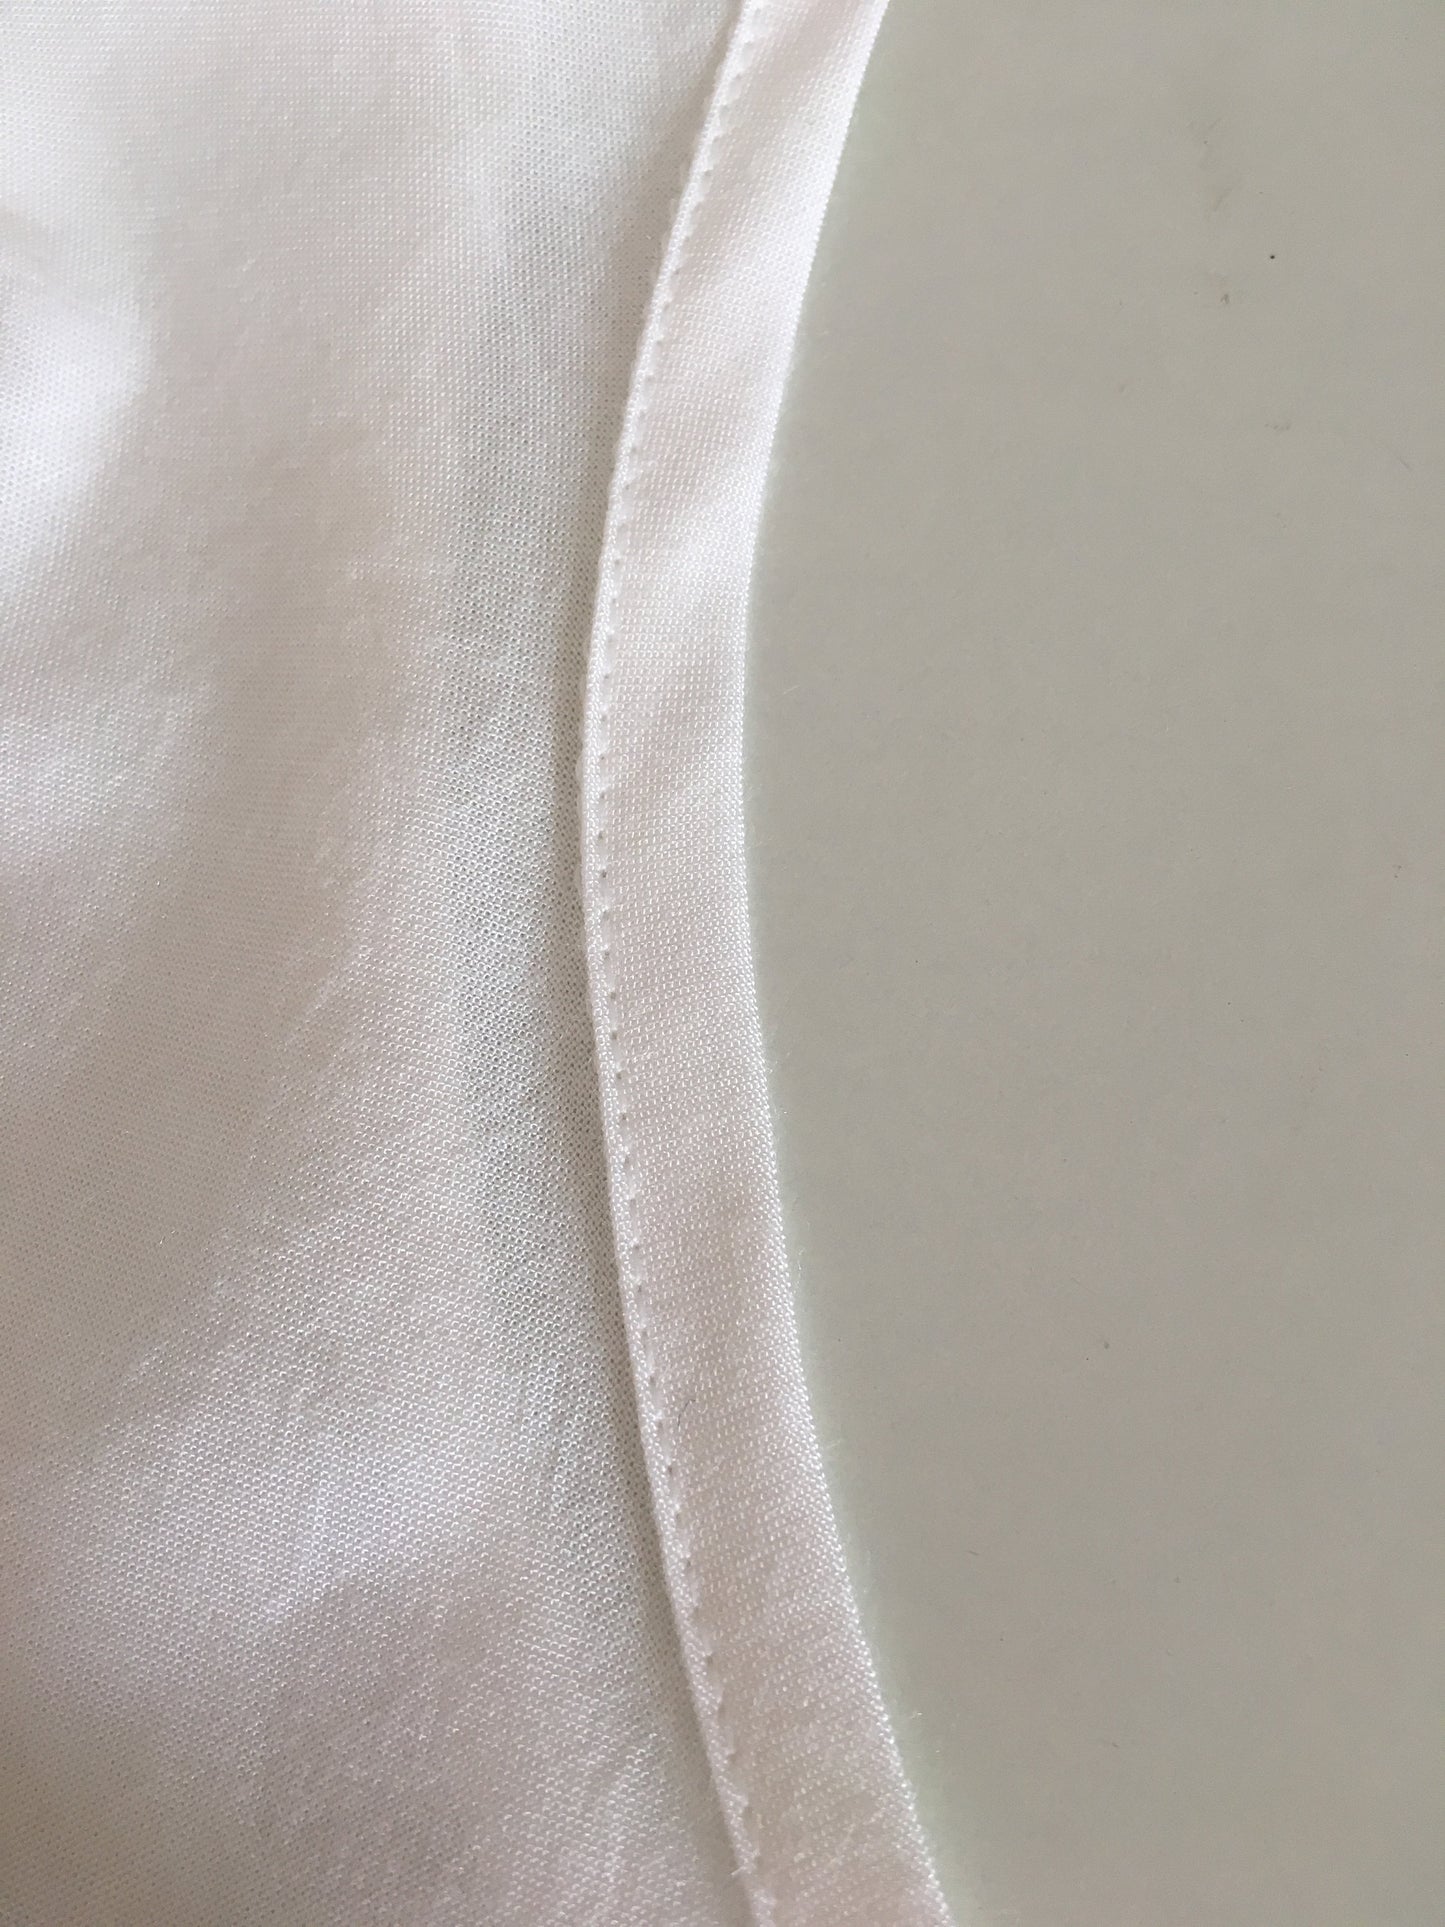 Indie Sewing Pattern | Luna V-neck top | PDF Instant Download sizes 6-24